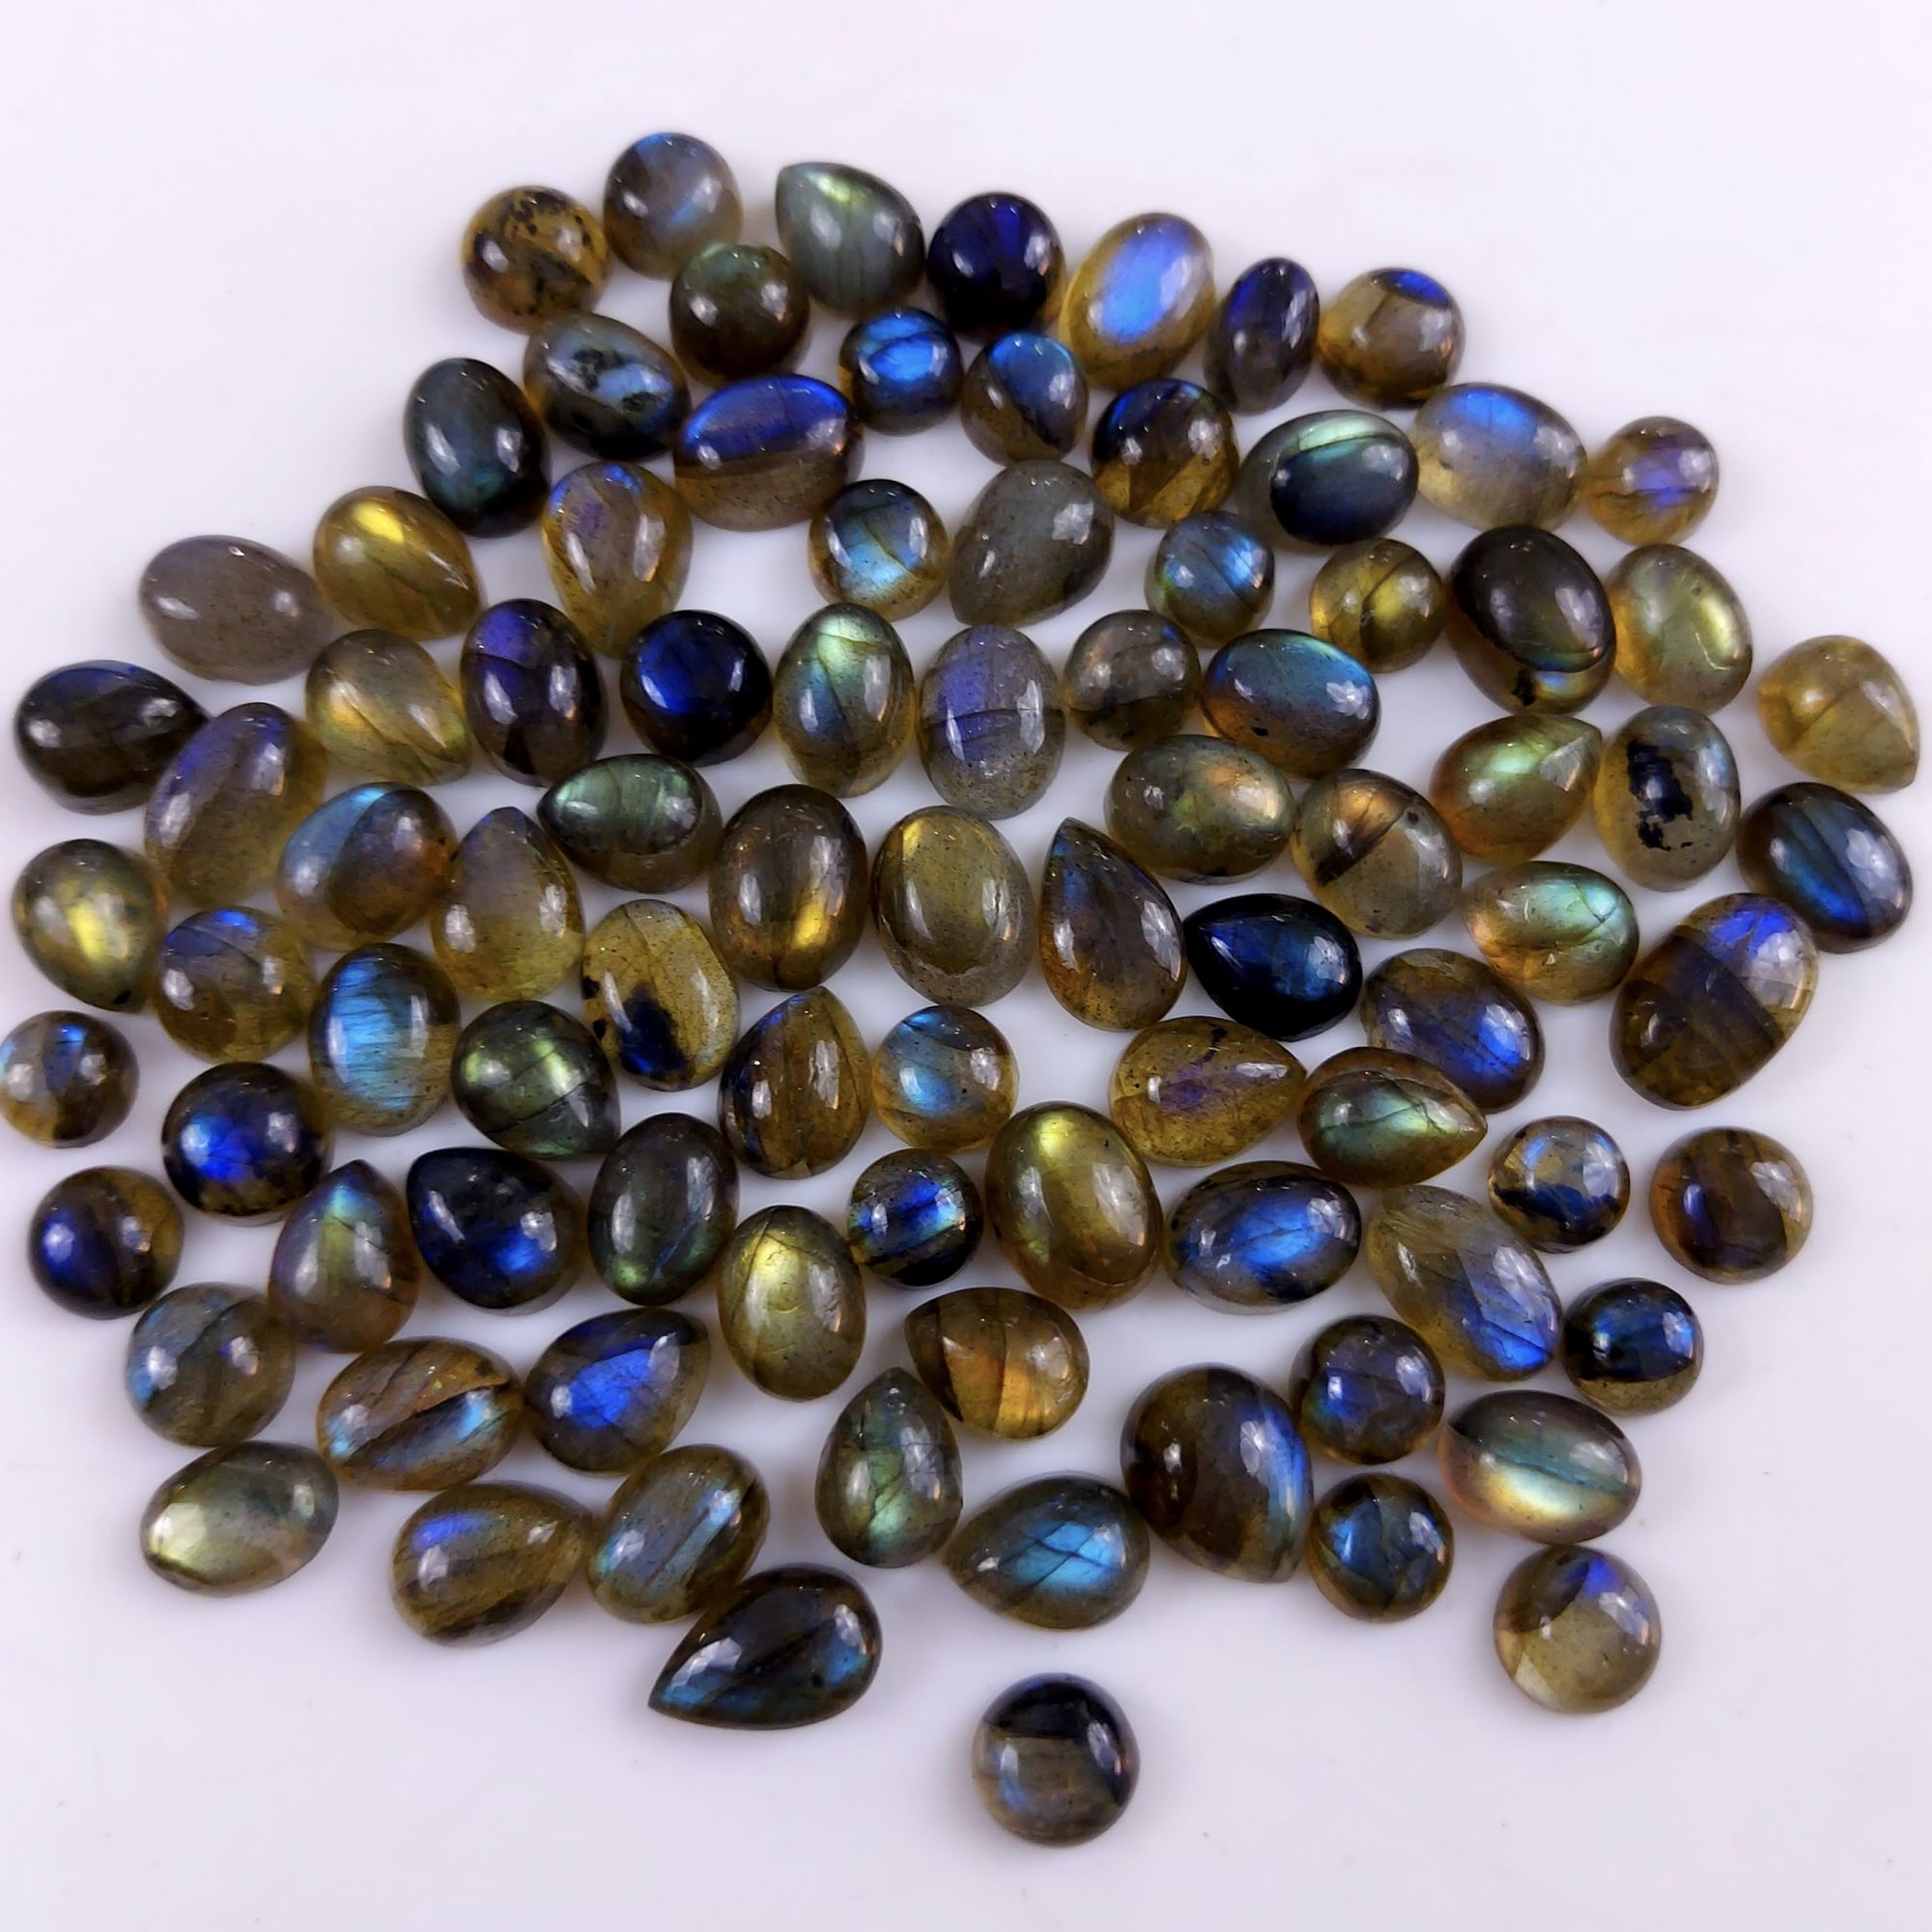 90 Pcs142Cts Natural Multifire Labradorite Loose Cabochon Gemstone Lot for Jewelry Making  7x5 3x3mm#1069